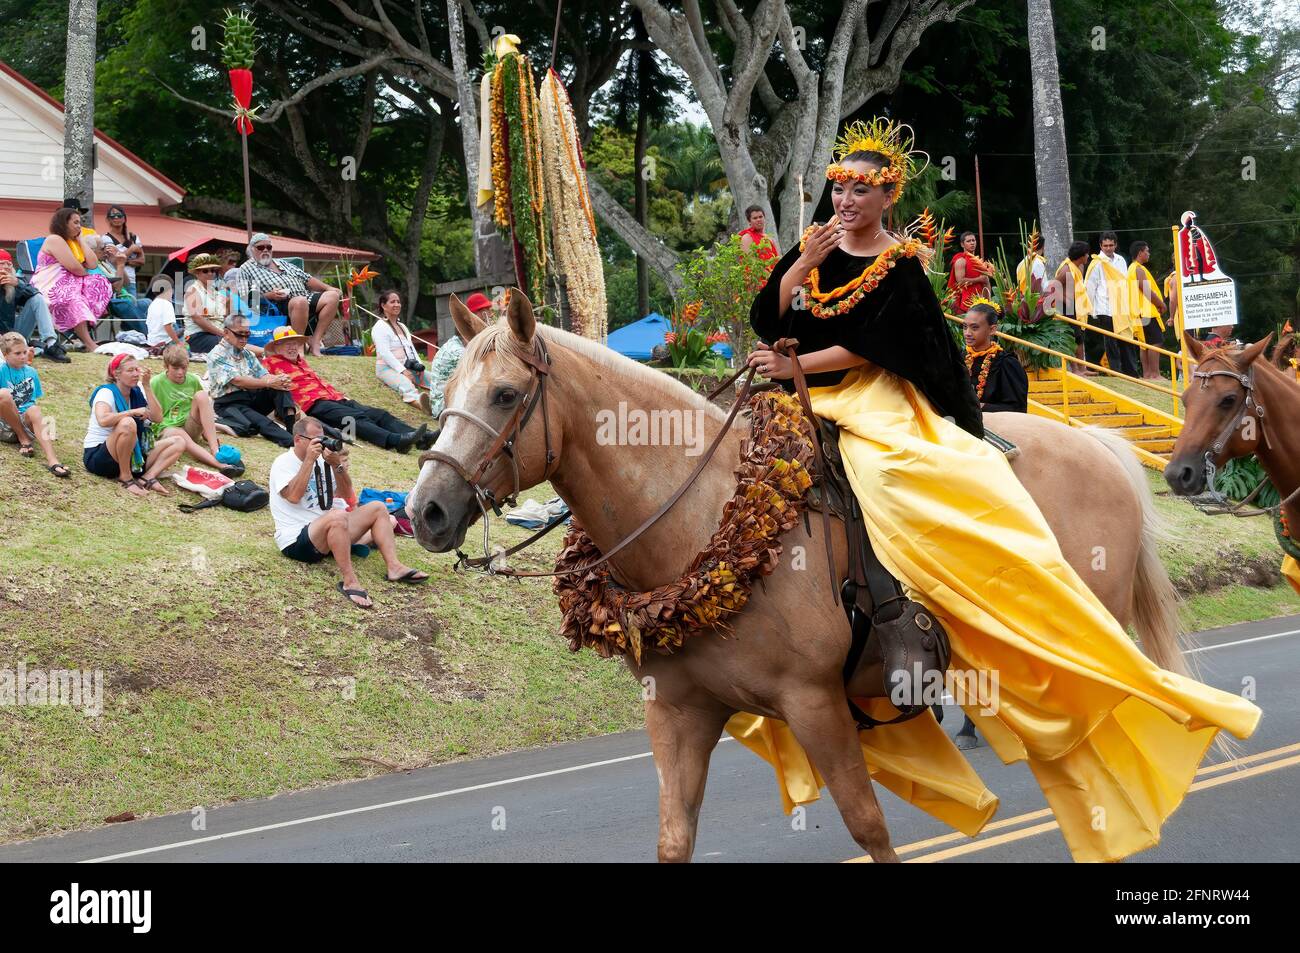 A Pa'u Princess Representing the Island of Oahu Rides in the King Kamehameha Day Parade in Kapa'au, North Kohala, Big Island, Hawaii. Stock Photo